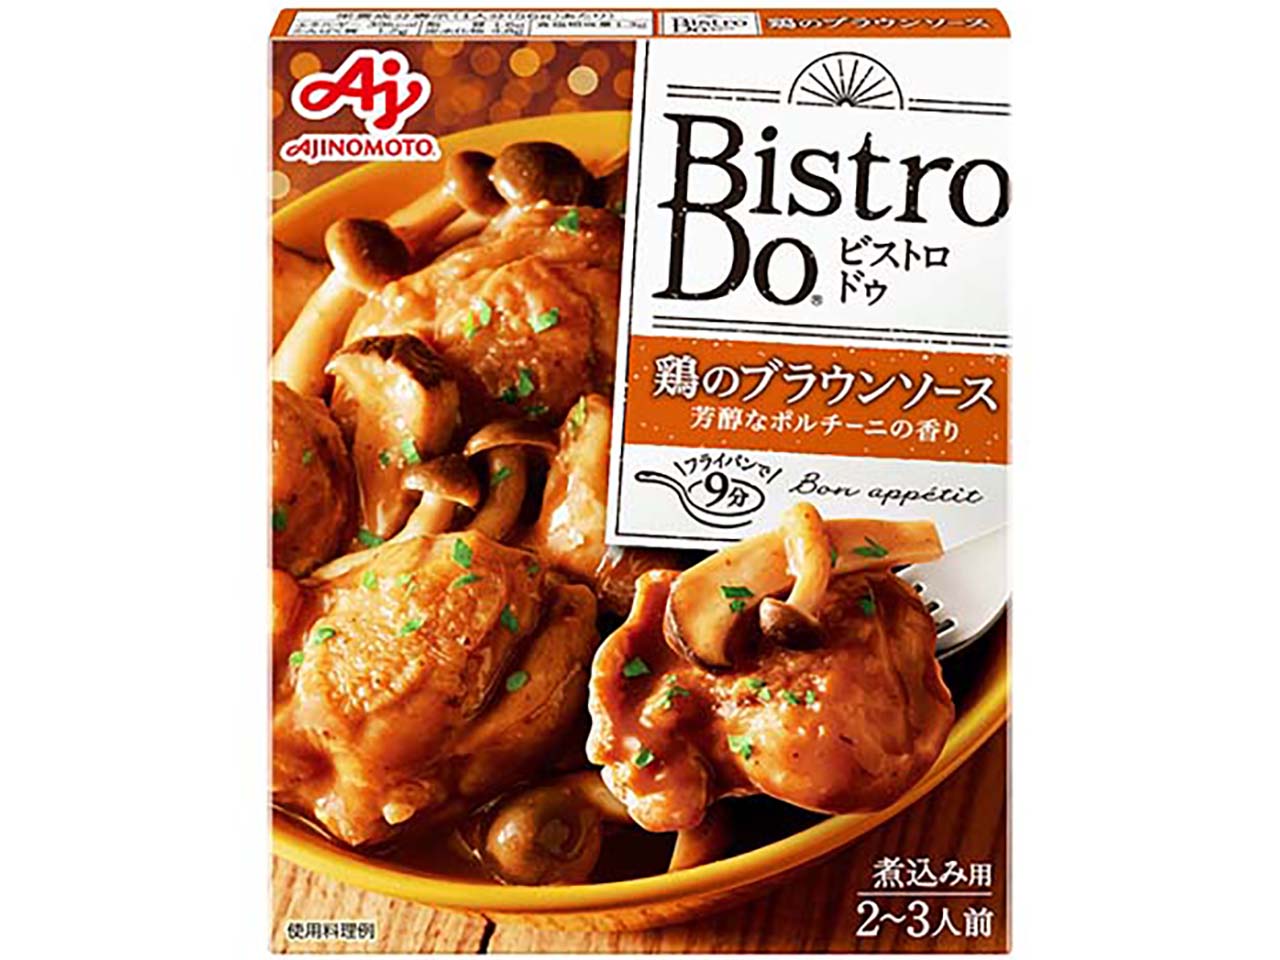 「Bistro Do」鶏ときのこのブラウンソース用